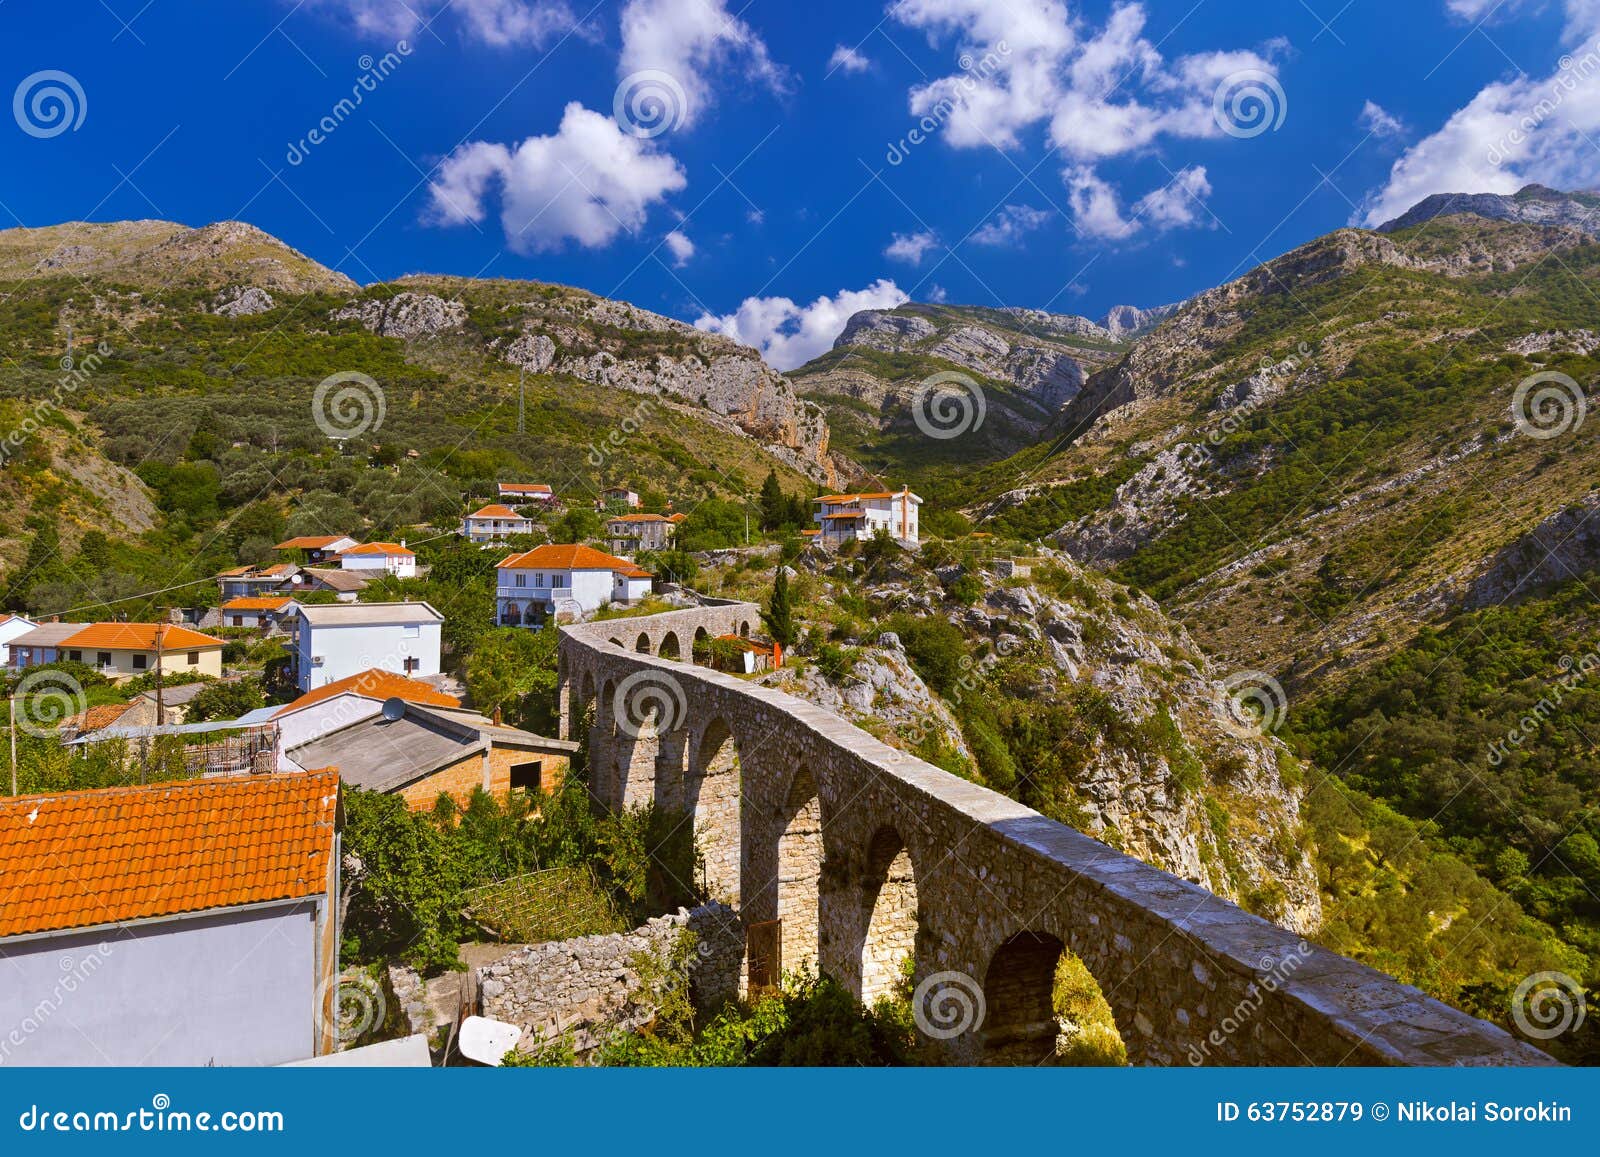 aqueduct in bar old town - montenegro